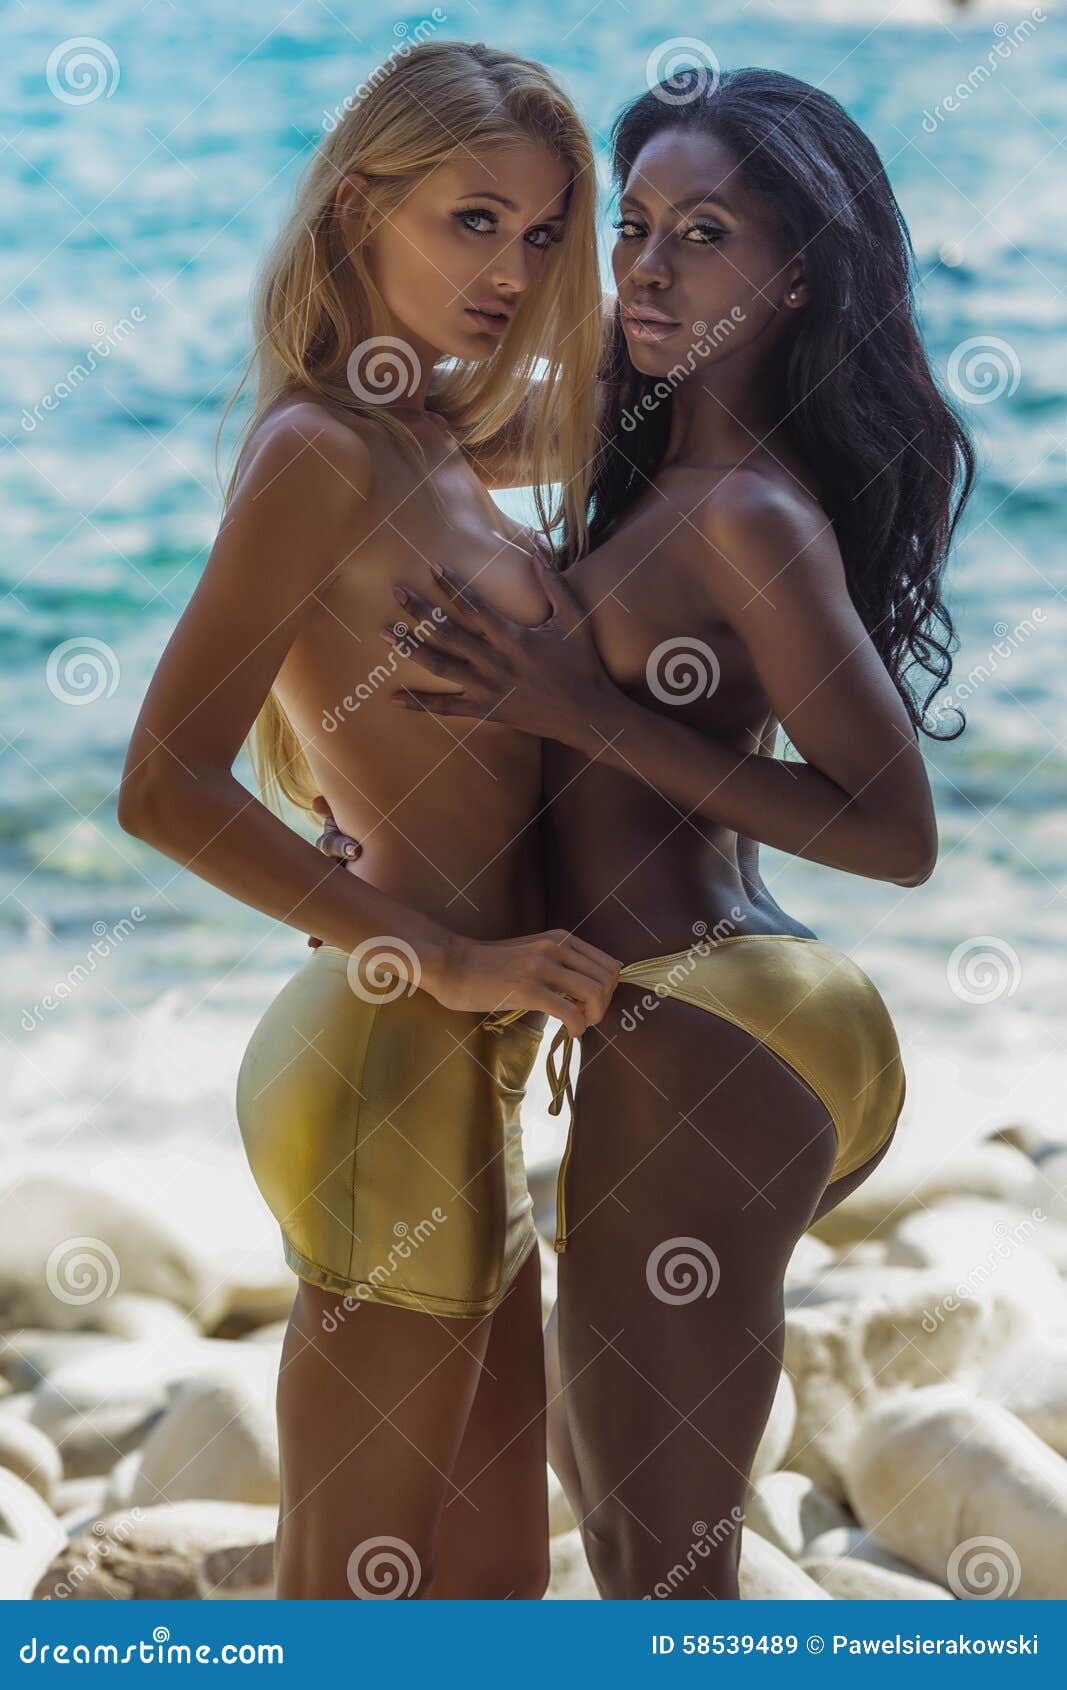 becca fishman share nude beach naked girls photos